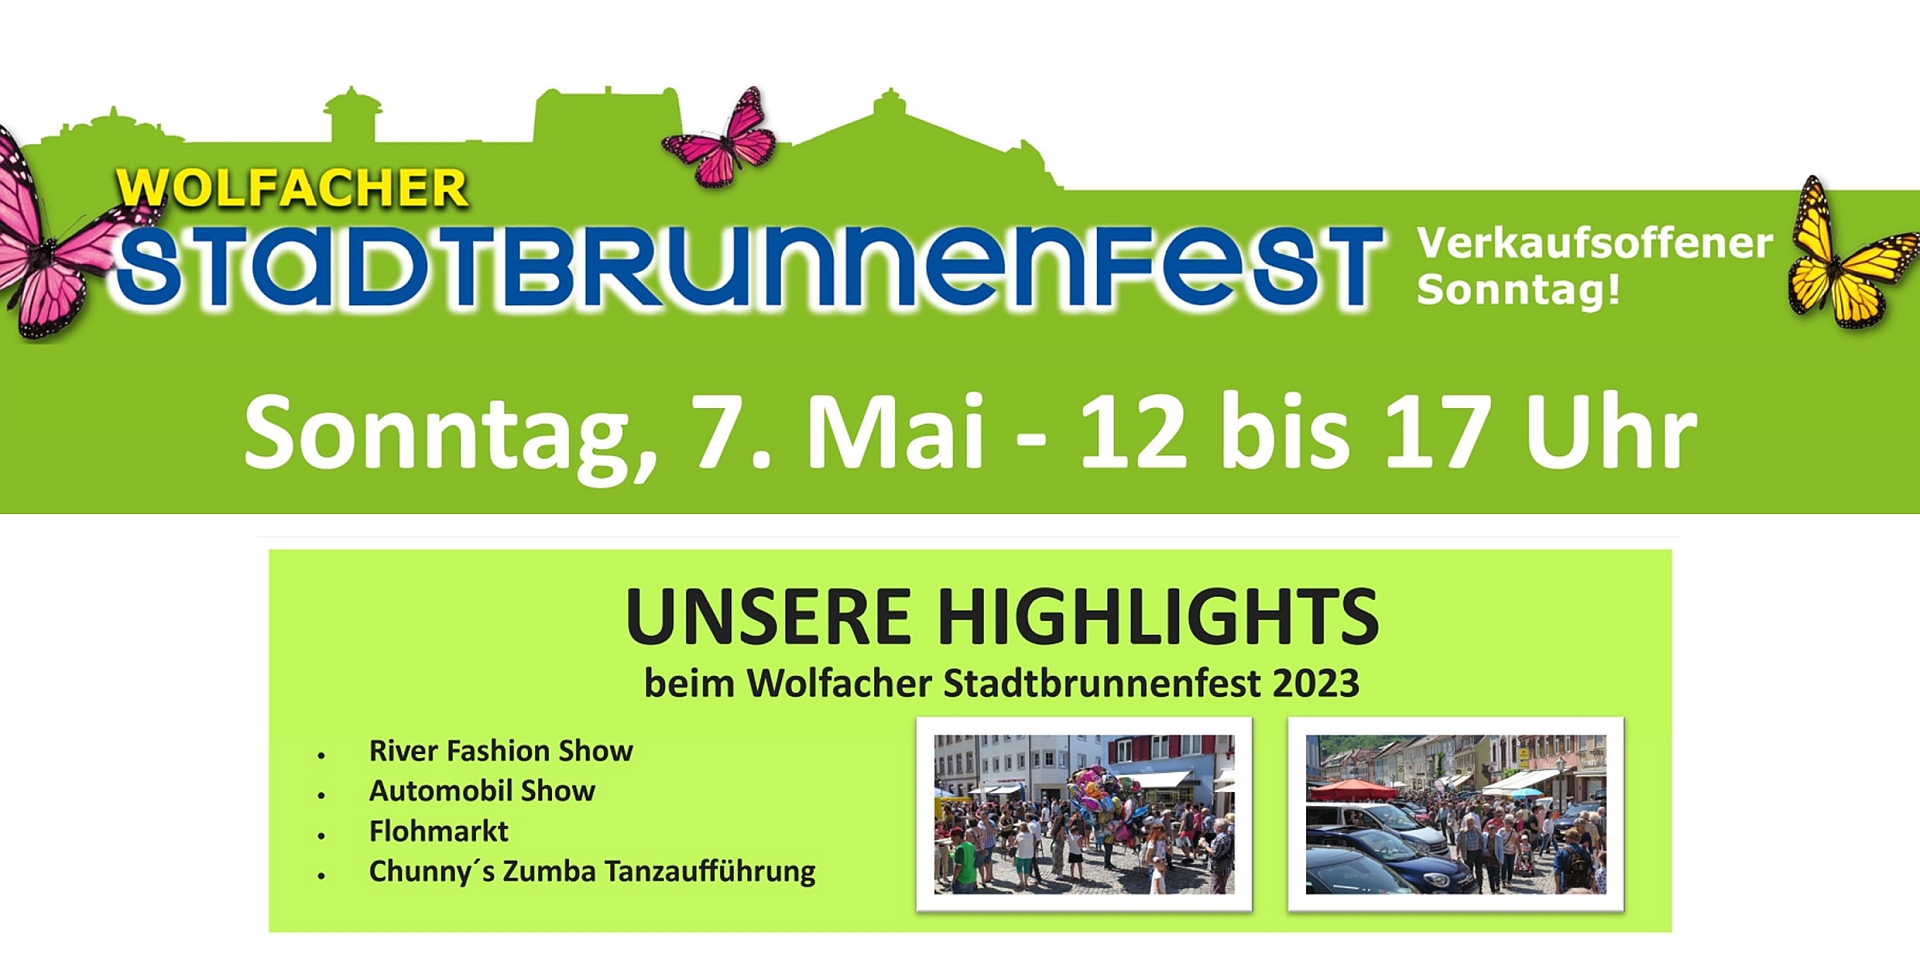 Stadtbrunnenfest - Verkaufsoffener Sonntag Mai 23